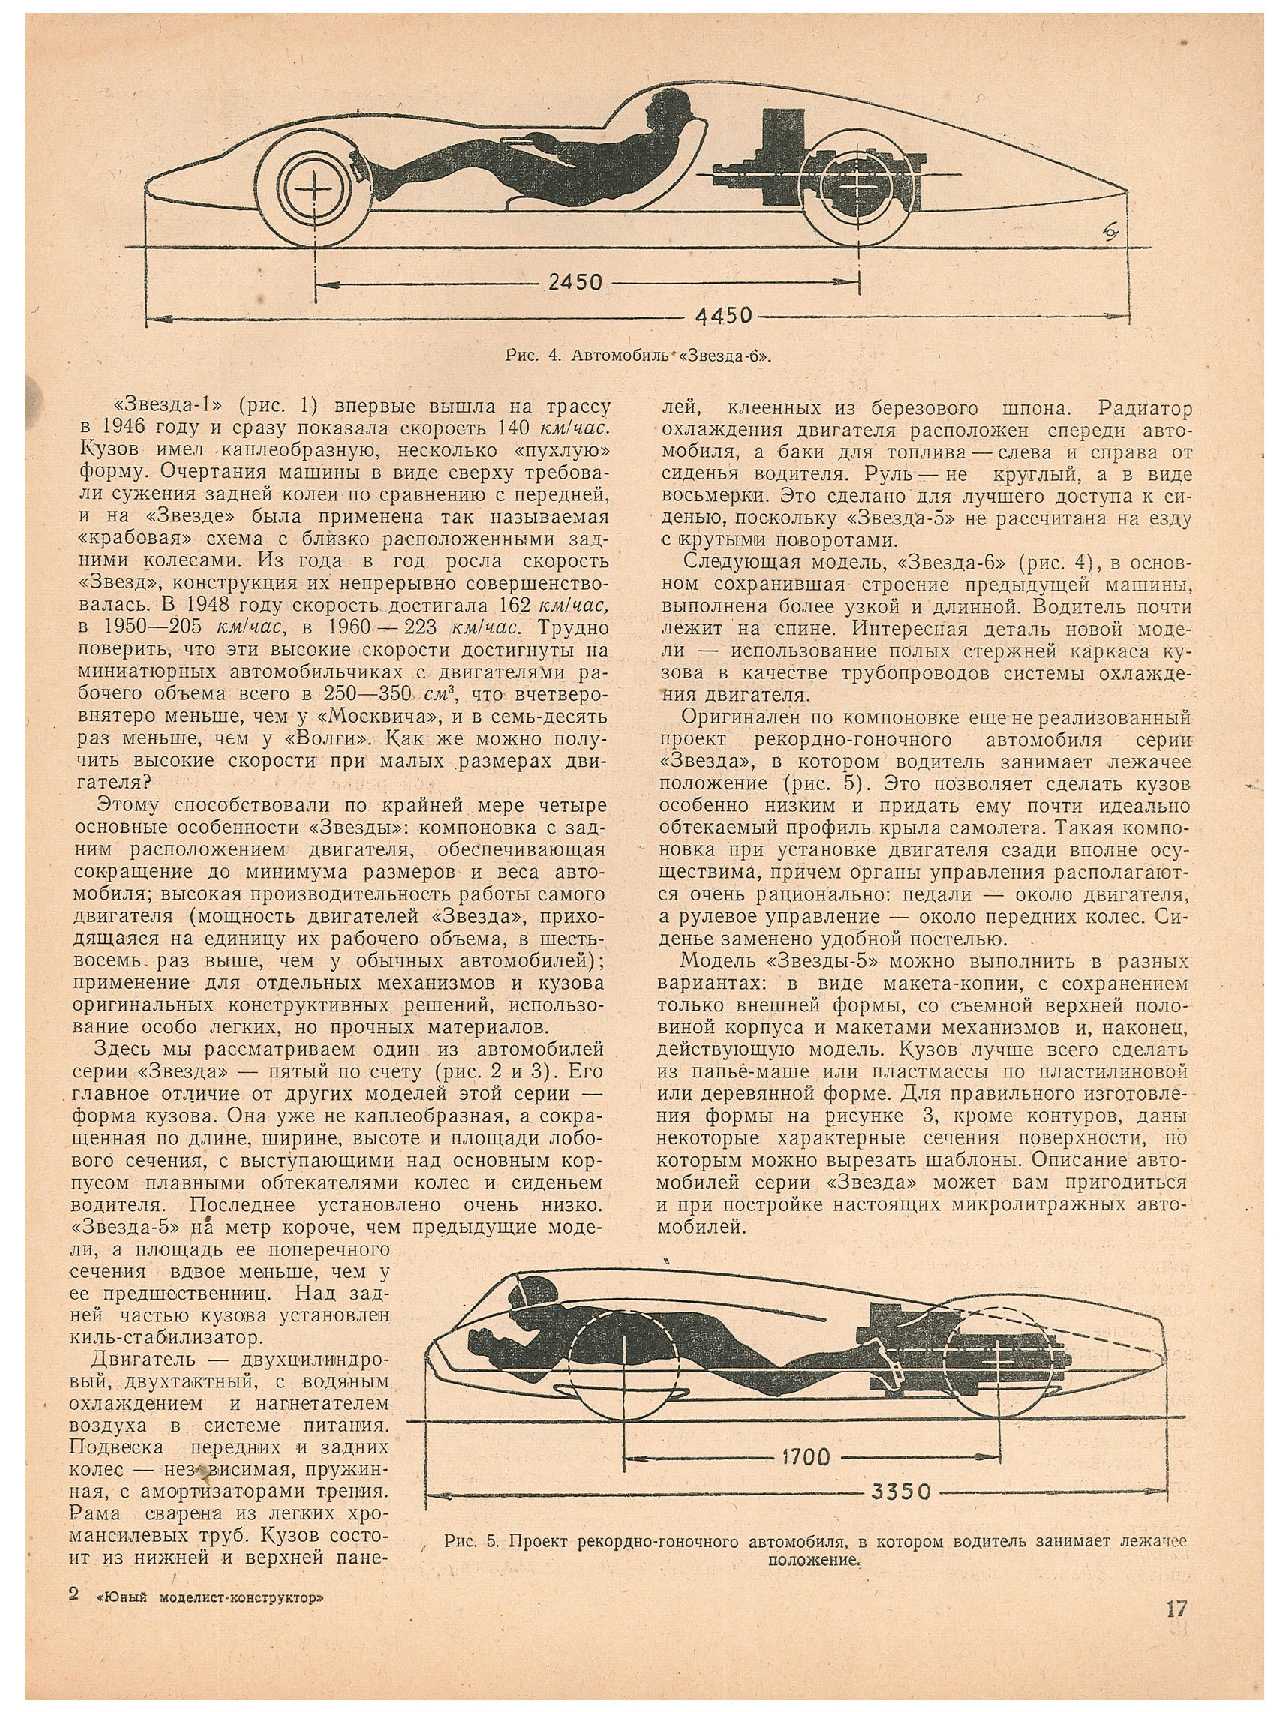 ЮМК 3, 1962, 17 c.